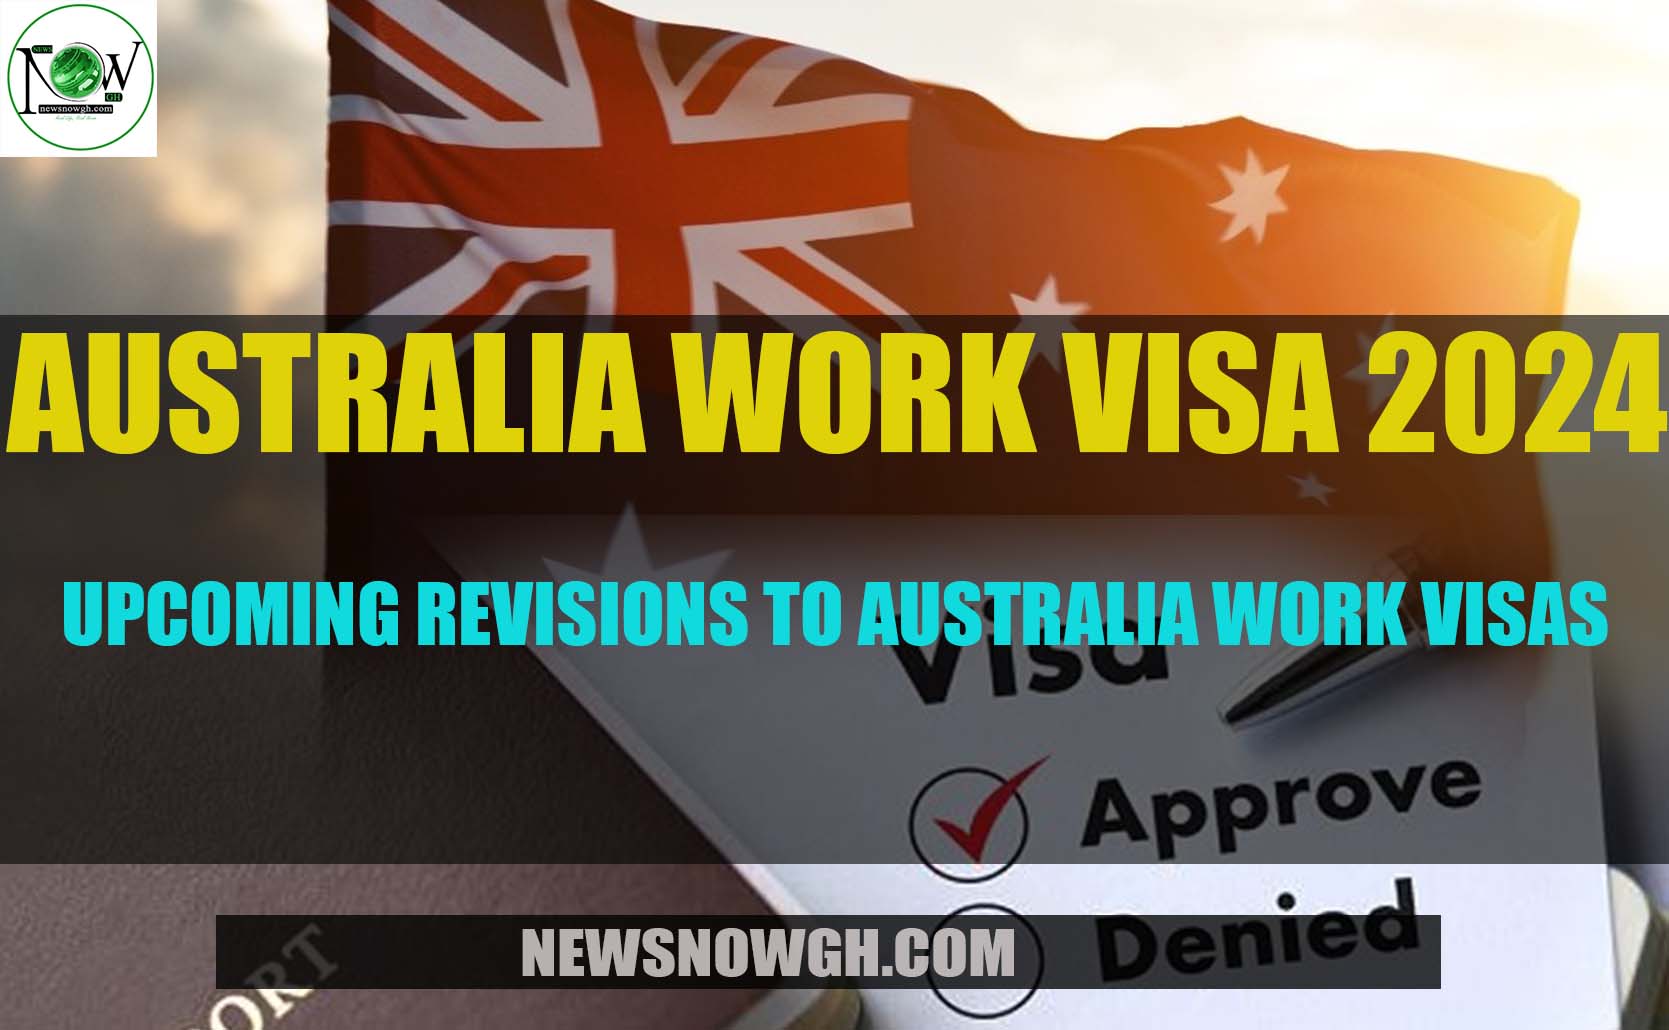 Revisions to Australia Work Visas Australia Work Visa 2024